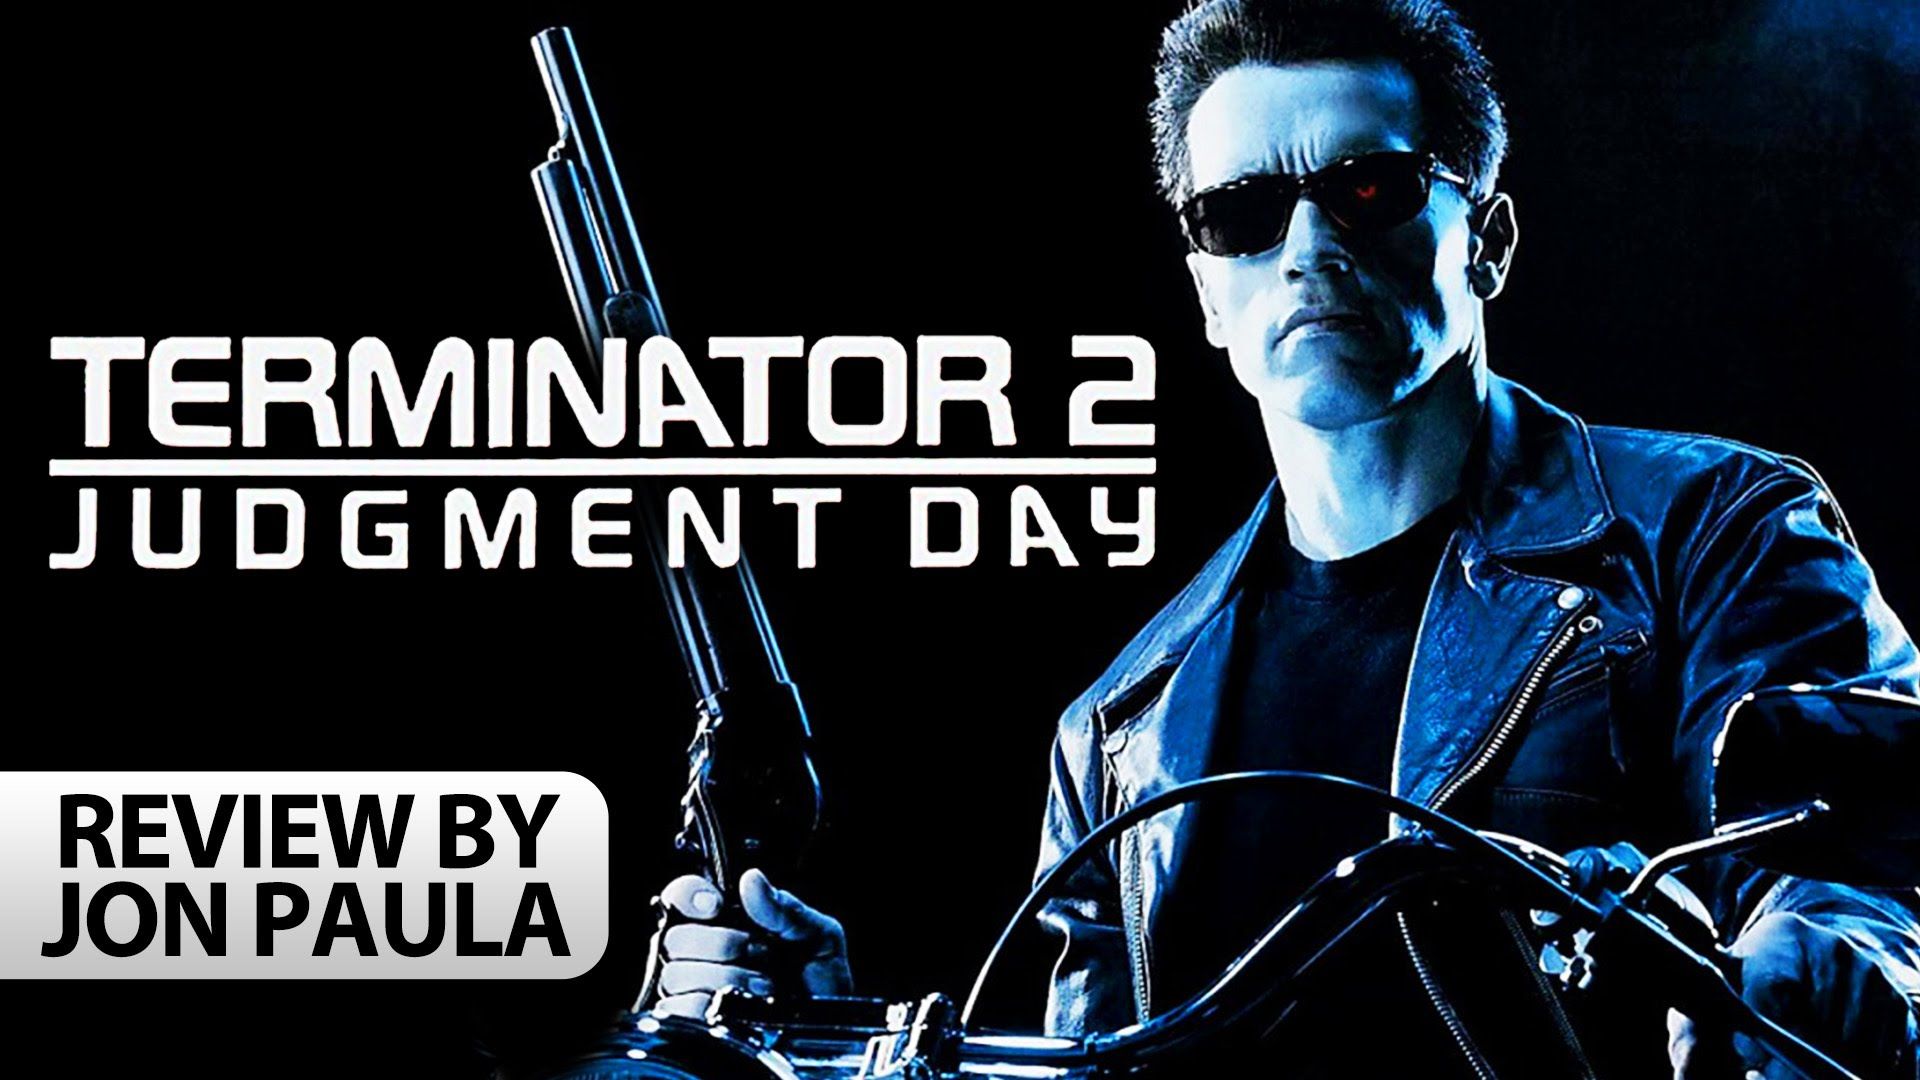 Terminator 2: Judgment Day Wallpaper